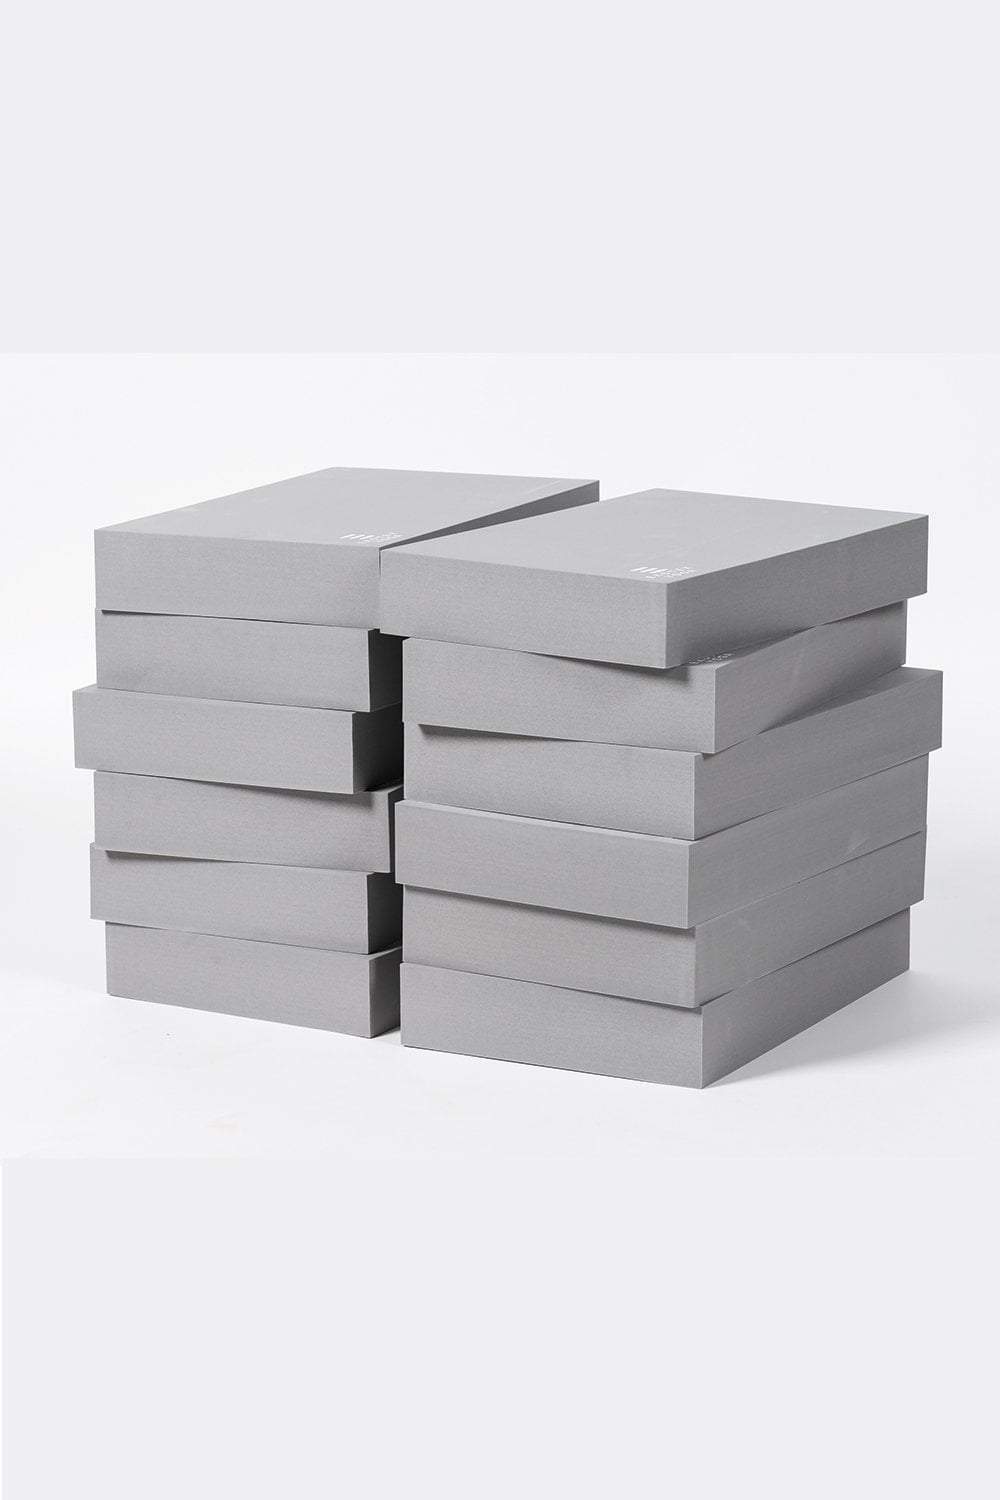 Yoga Blocks Storm Grey Recycled Foam Yoga Block - Pack of 12